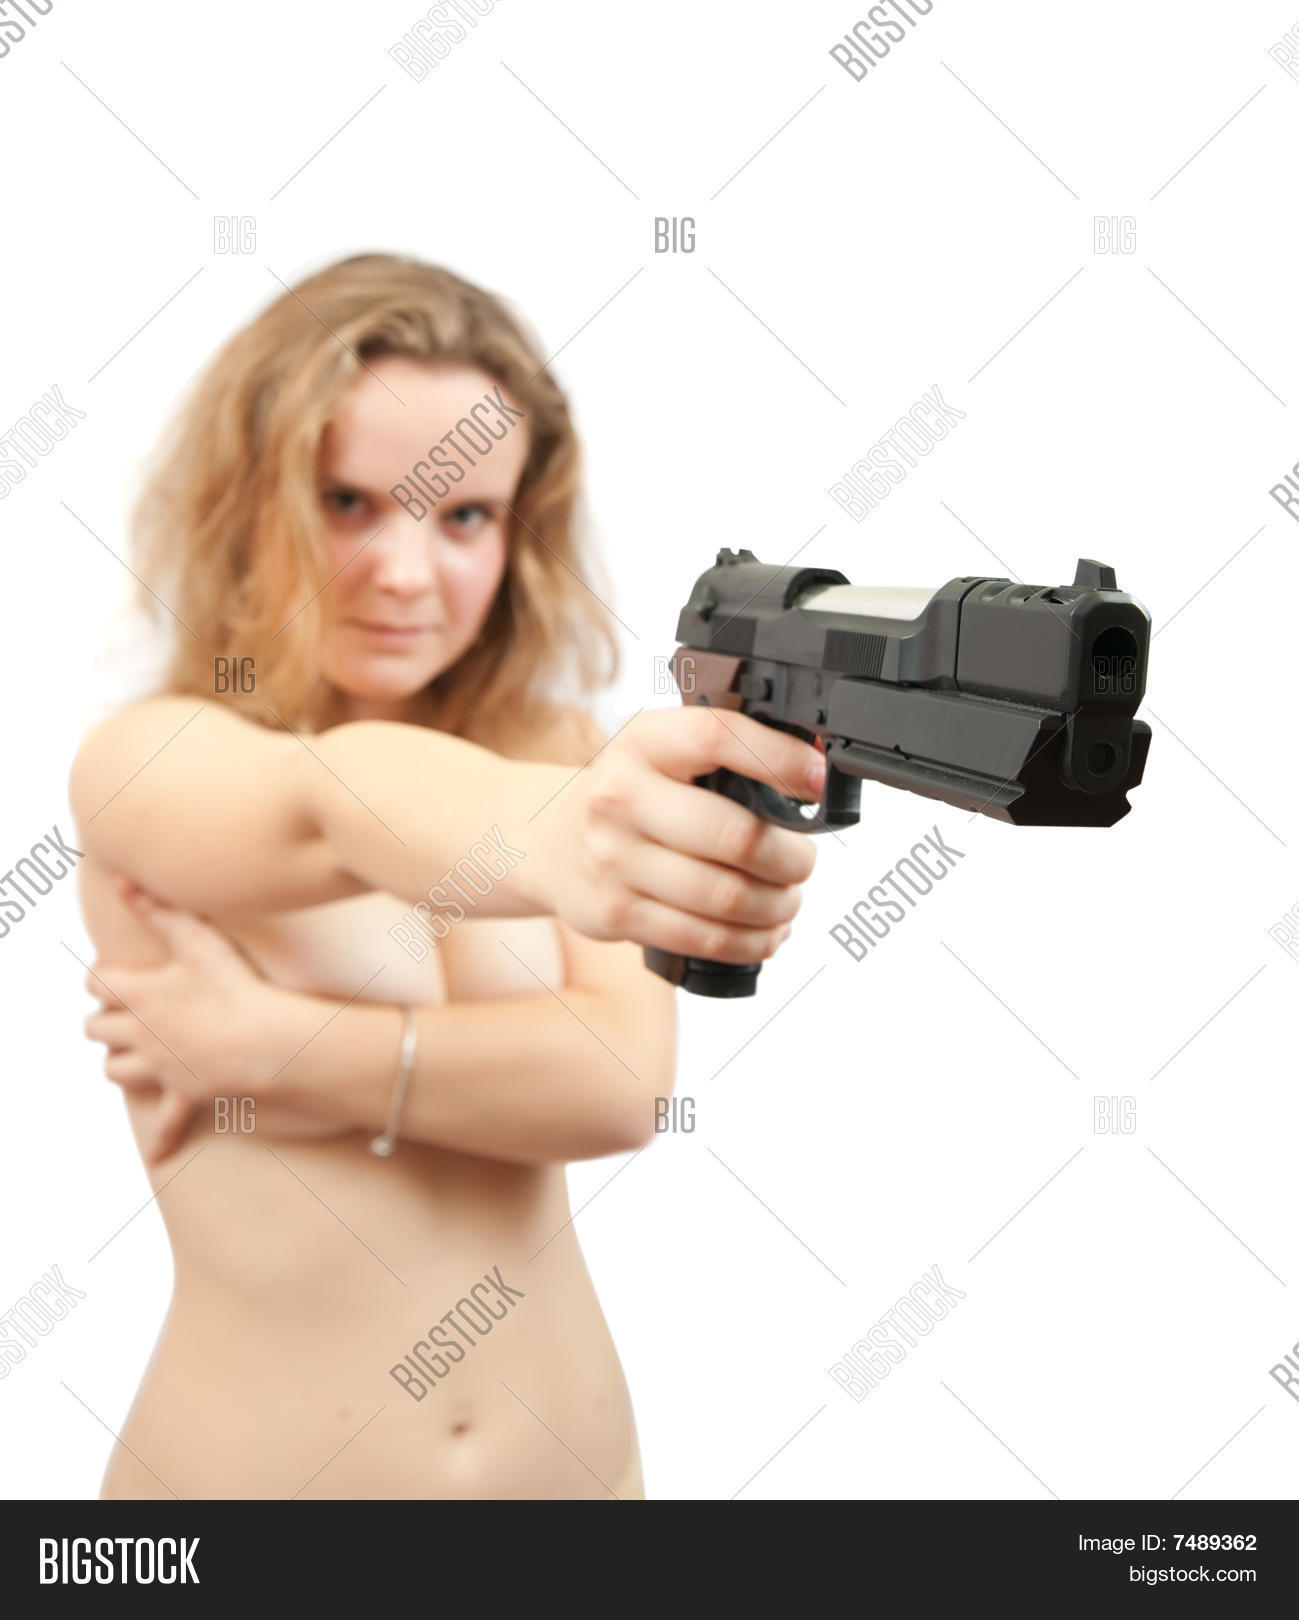 christopher refugio add photo nude women with guns